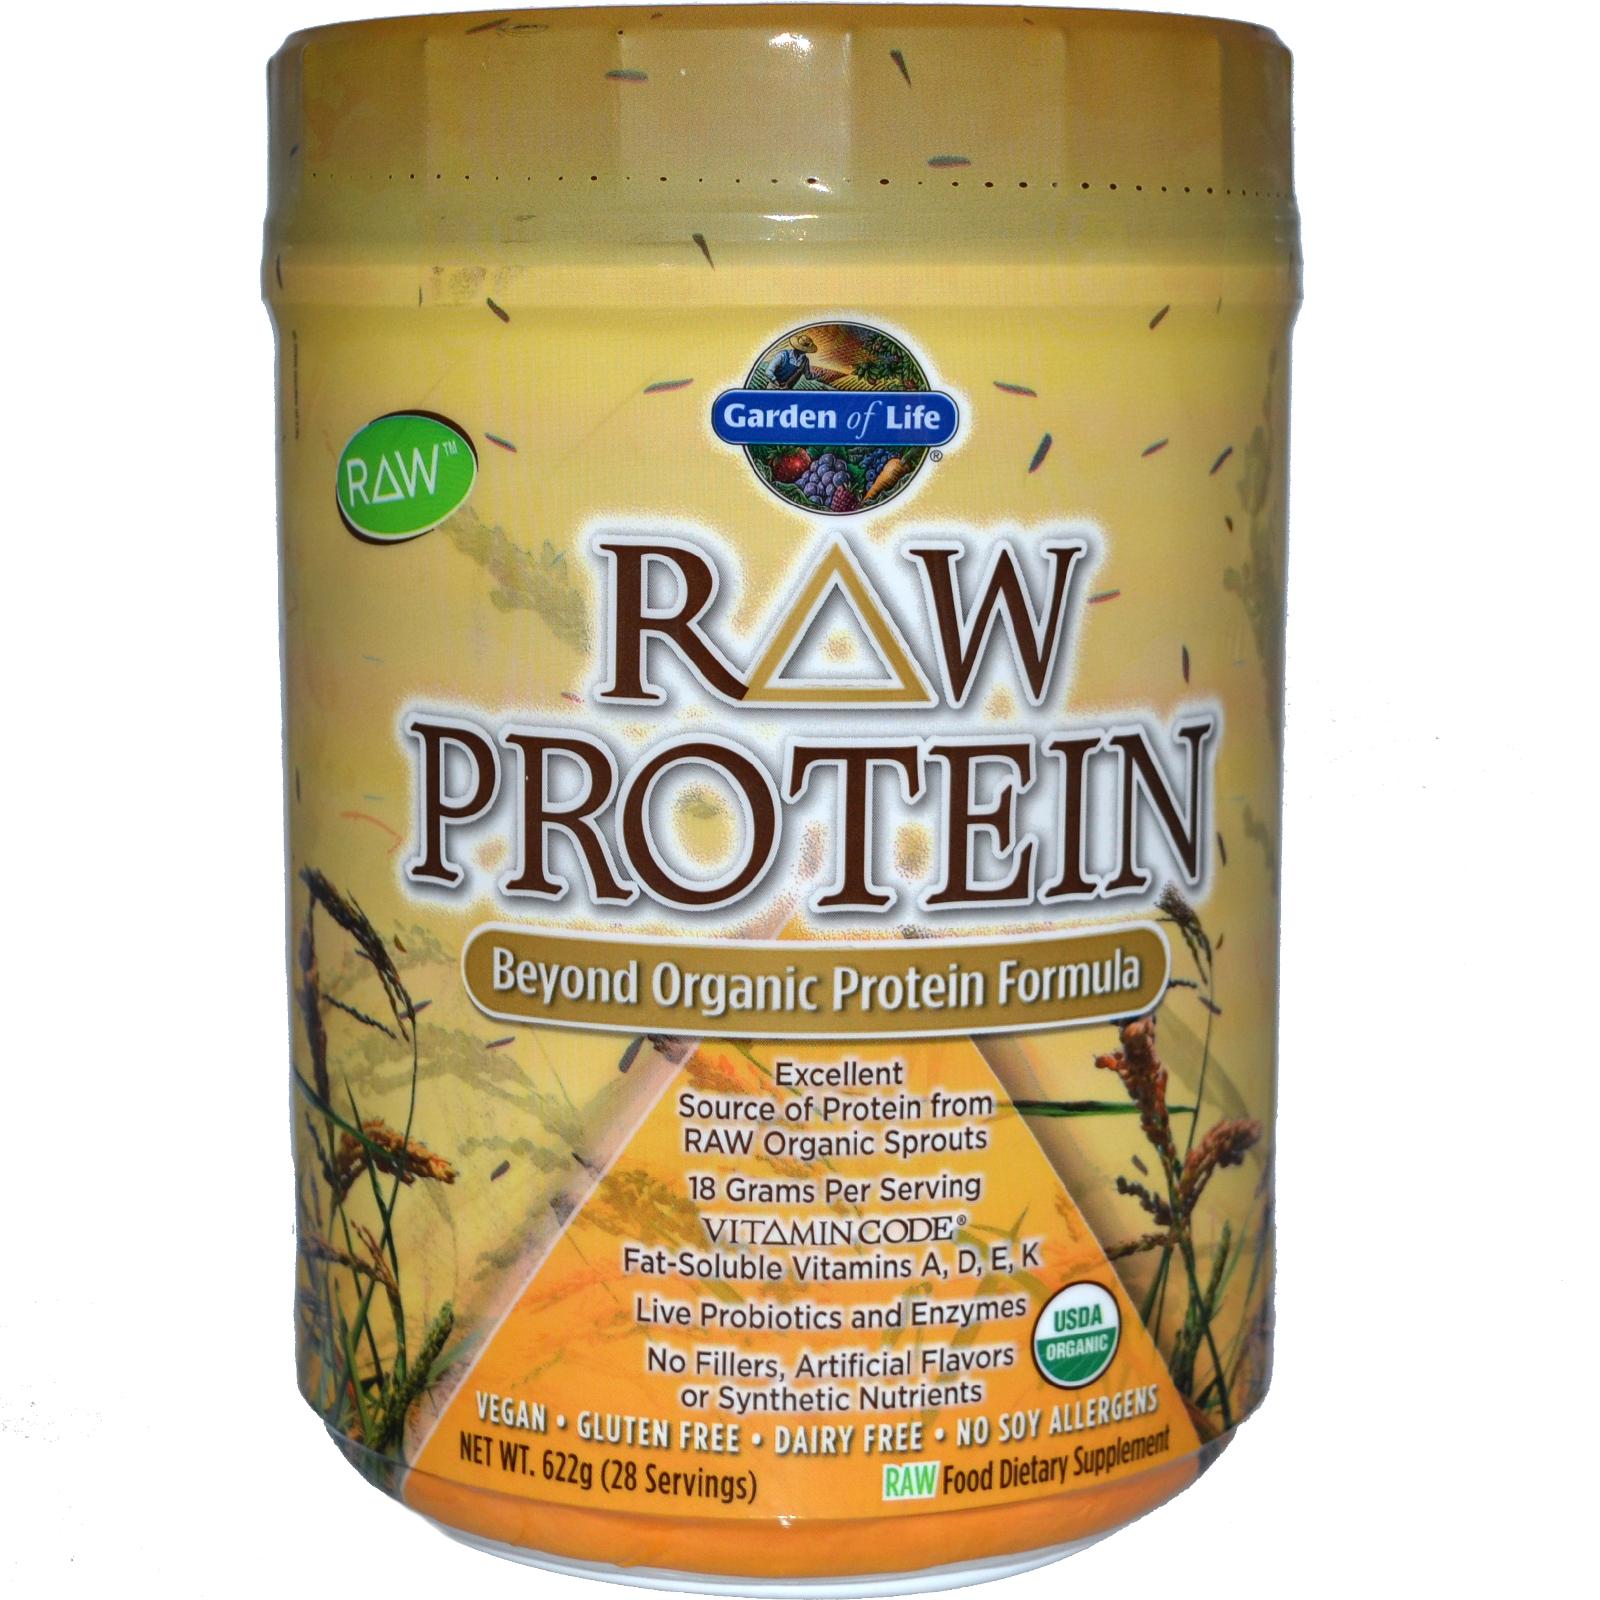 Garden of Life RAW Protein